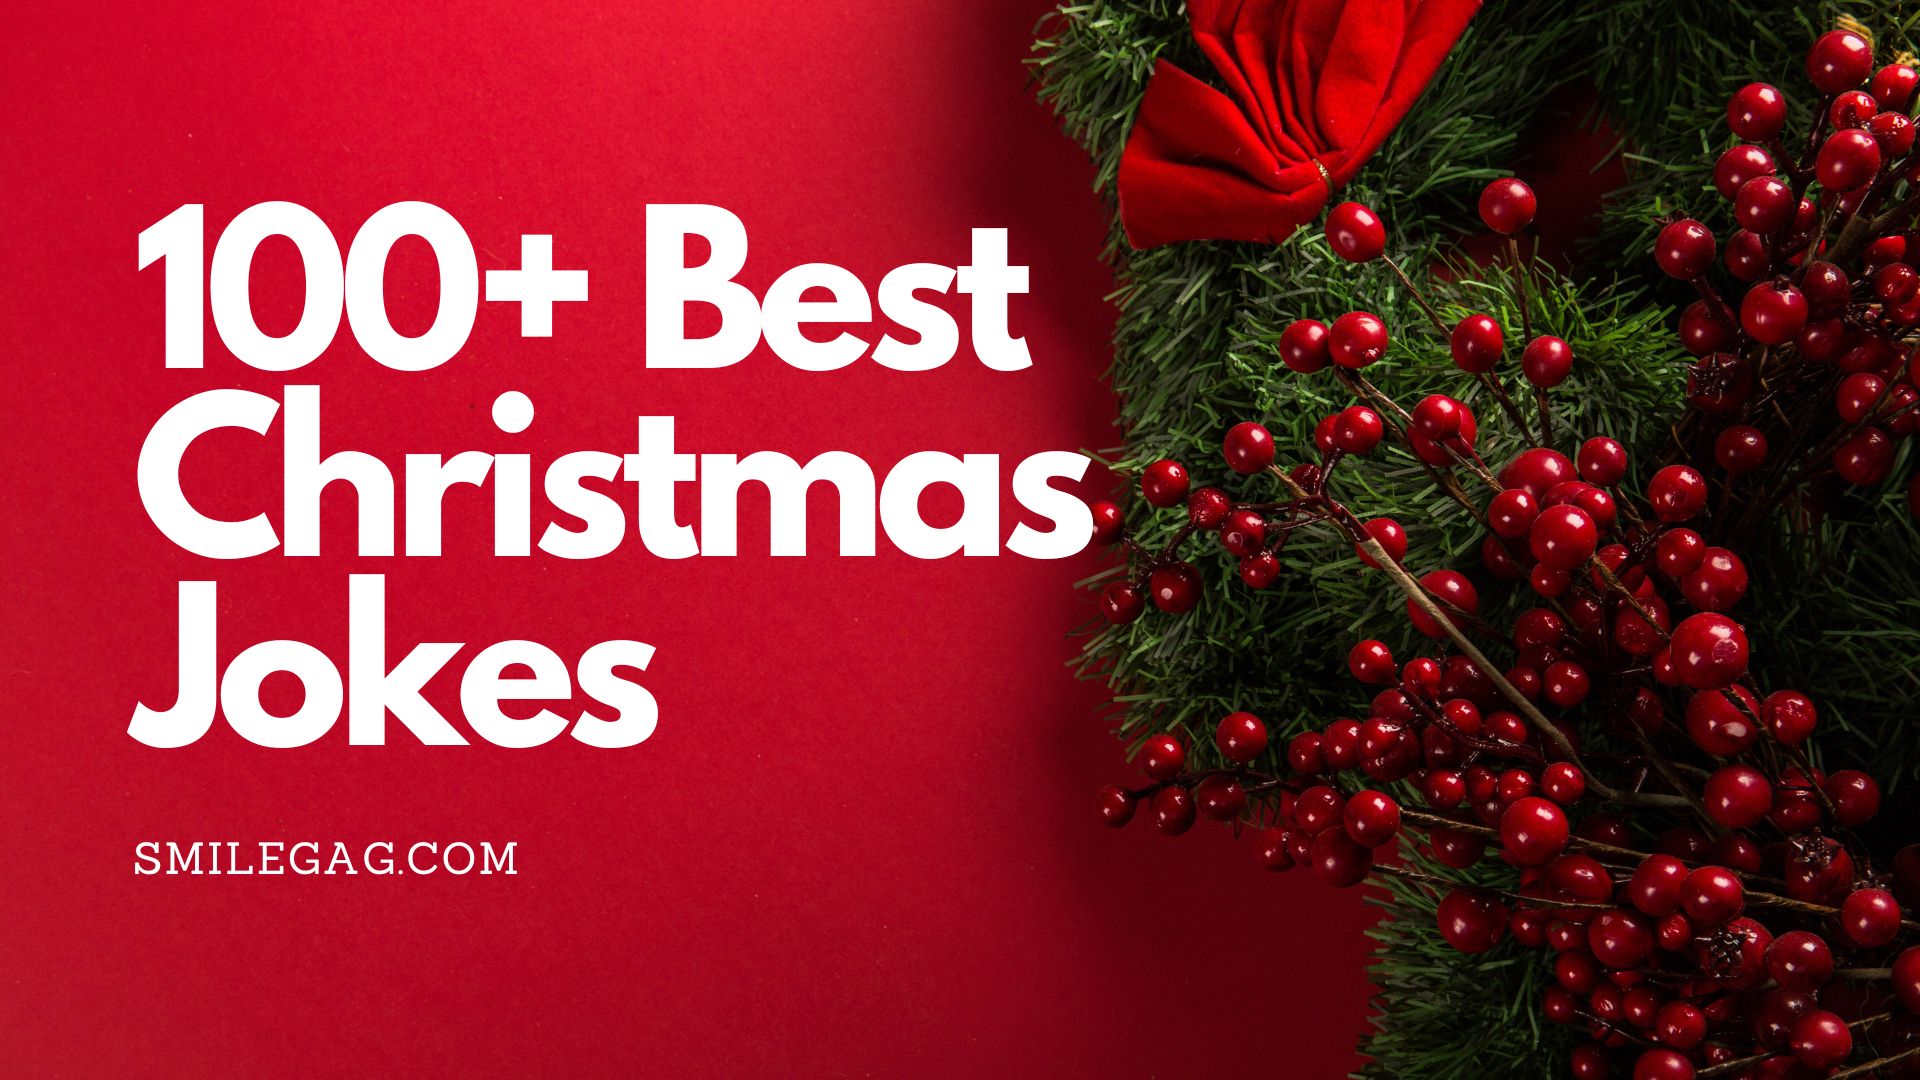 100+ Best Christmas Jokes